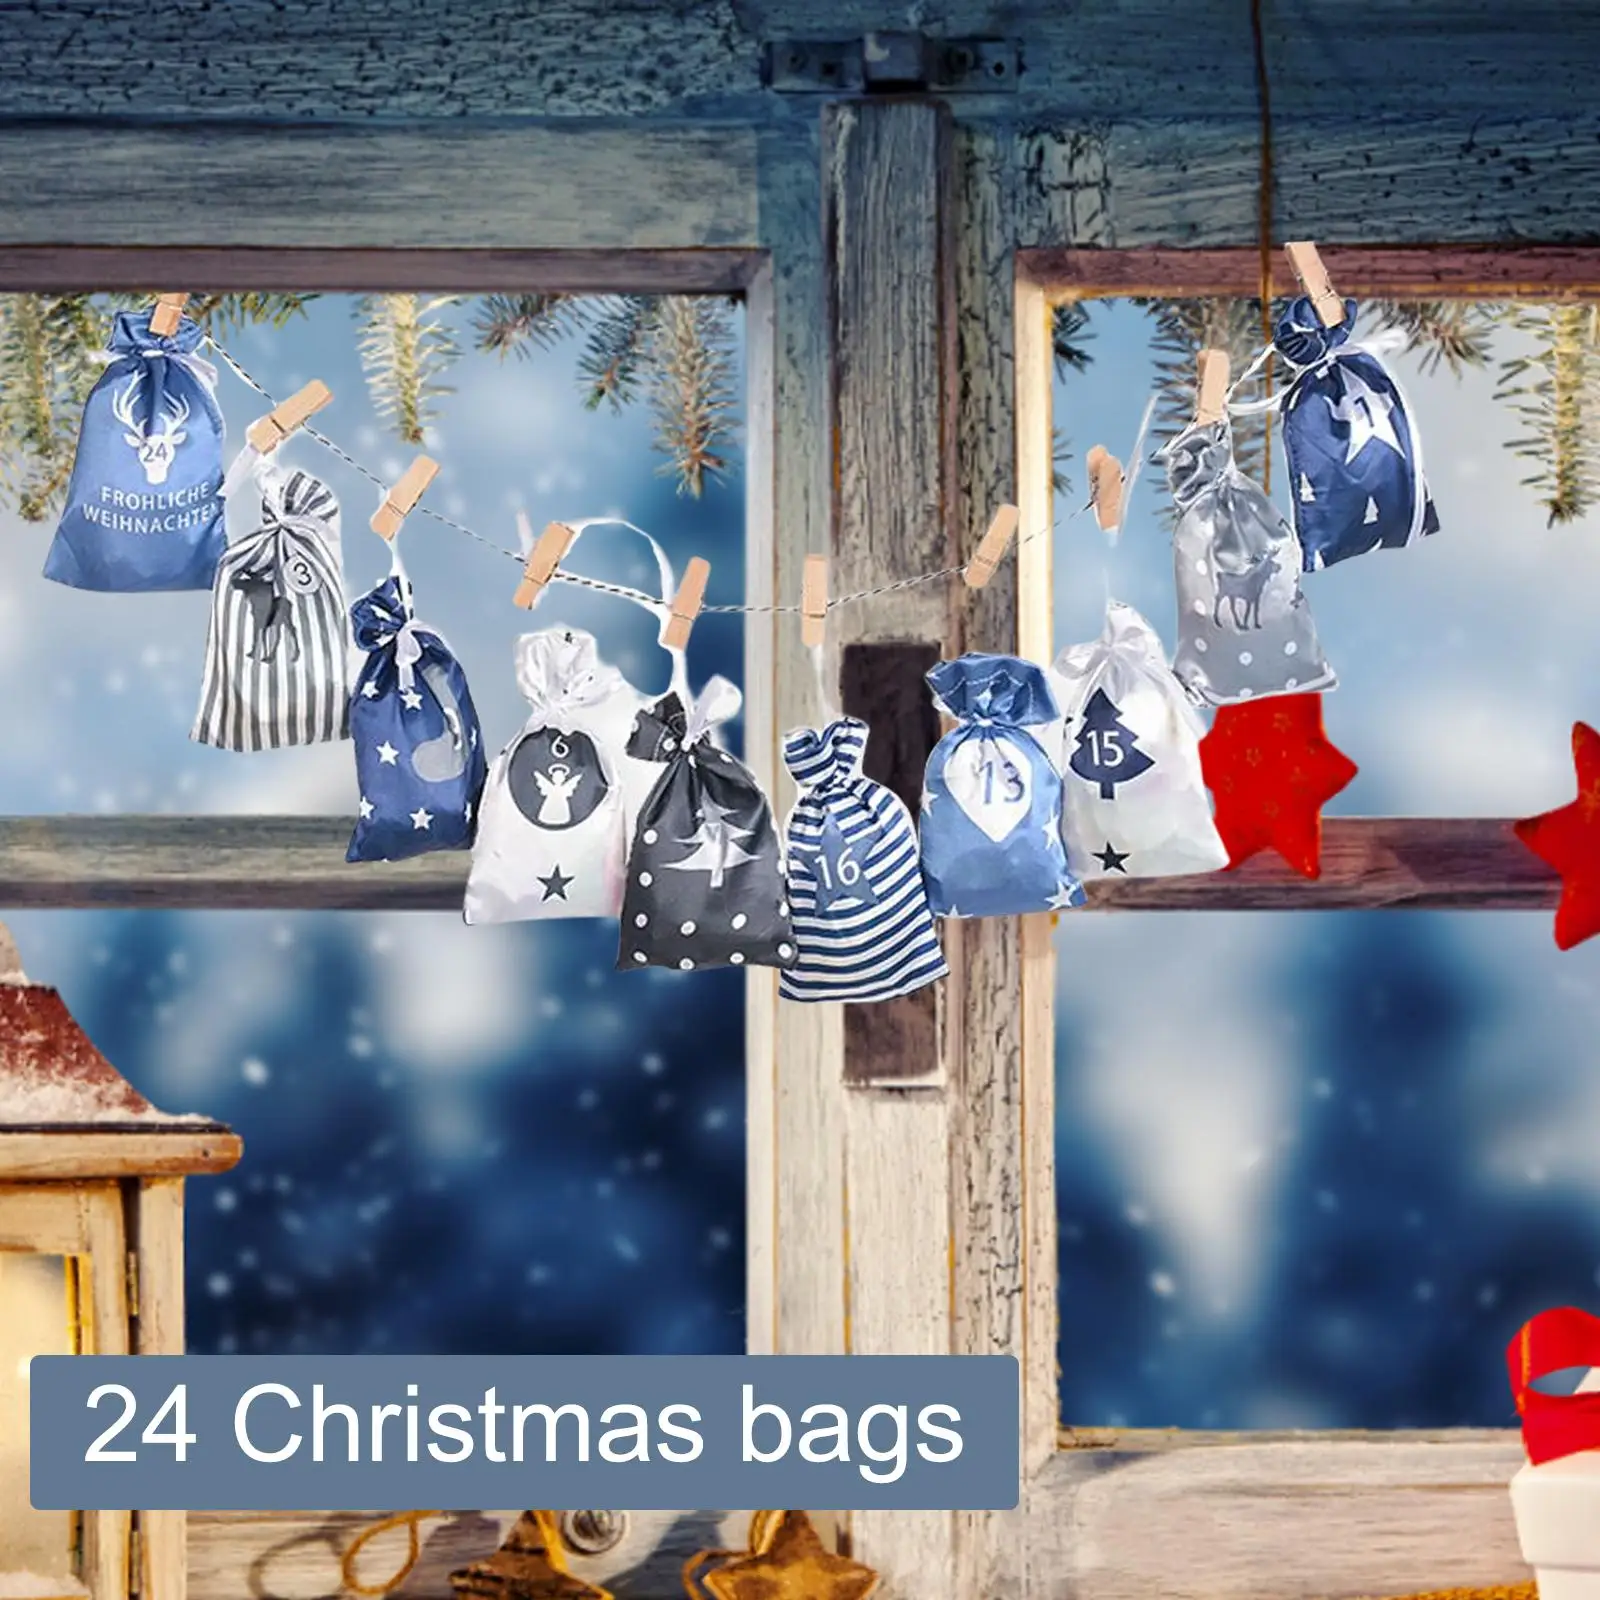 24Days Advent Calendar Bags Christmas Embellishments Pocket Set DIY Gift Reciprocal Decoration for Festival Tree Home Holiday